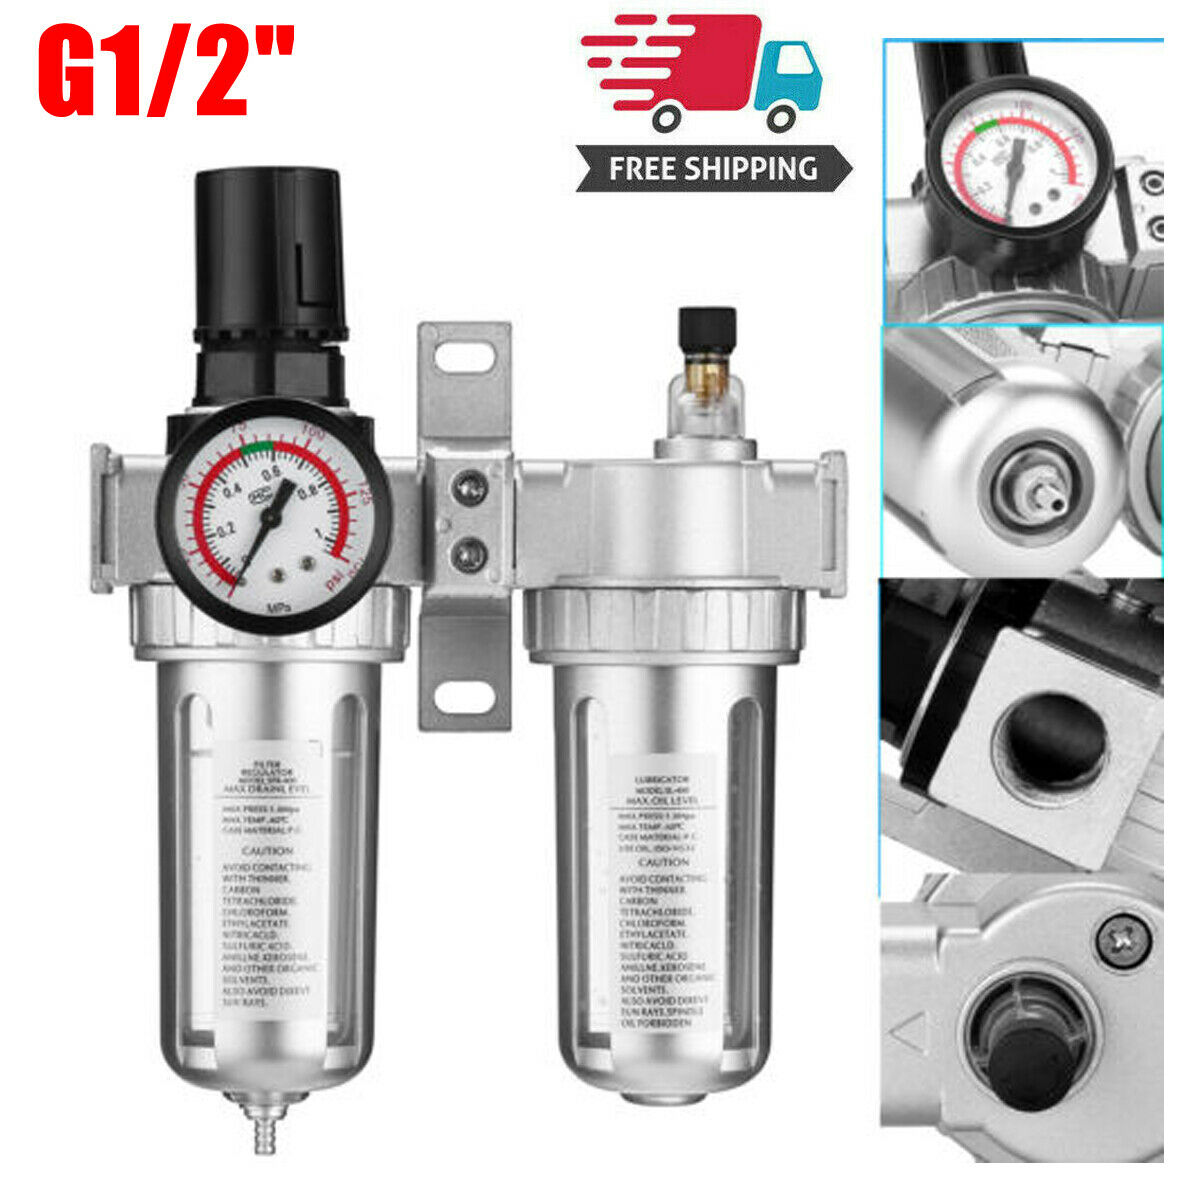 G1/2" Air Compressor Filter Oil Water Separator Trap Tools With/ Regulator Gauge